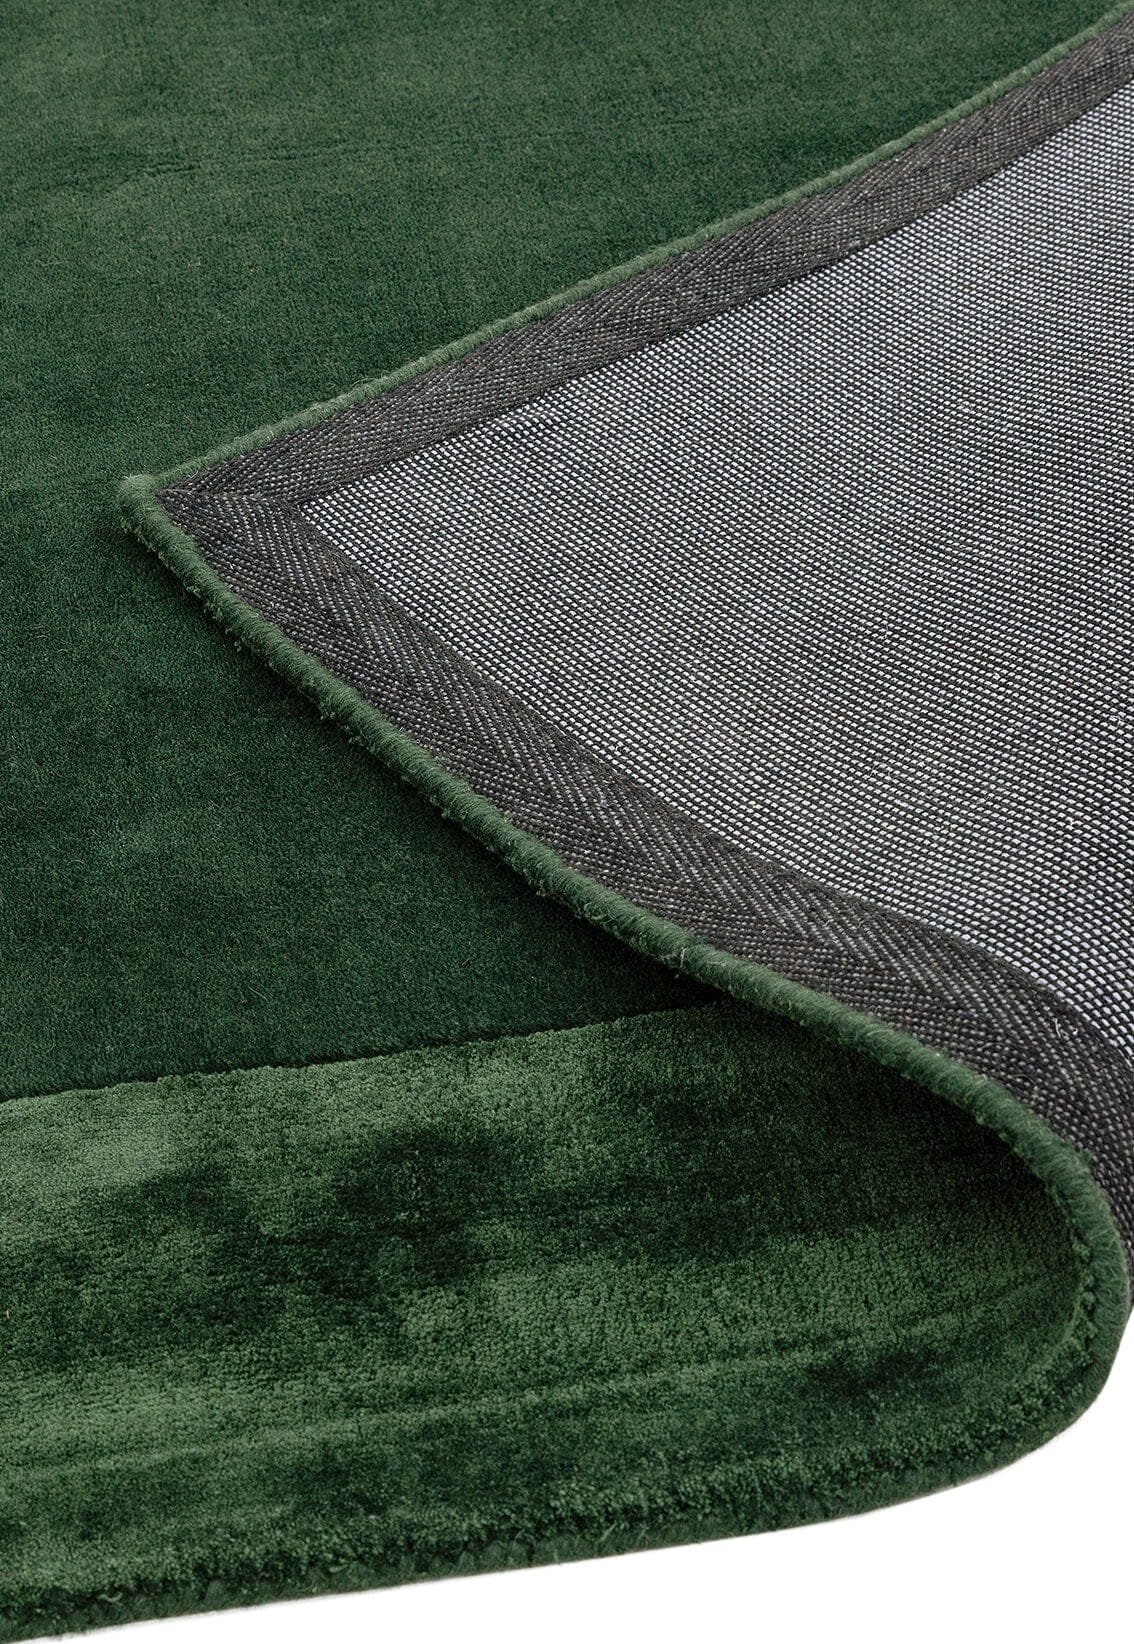 Asiatic Carpets Ascot Hand Woven Rug Green - 120 x 170cm